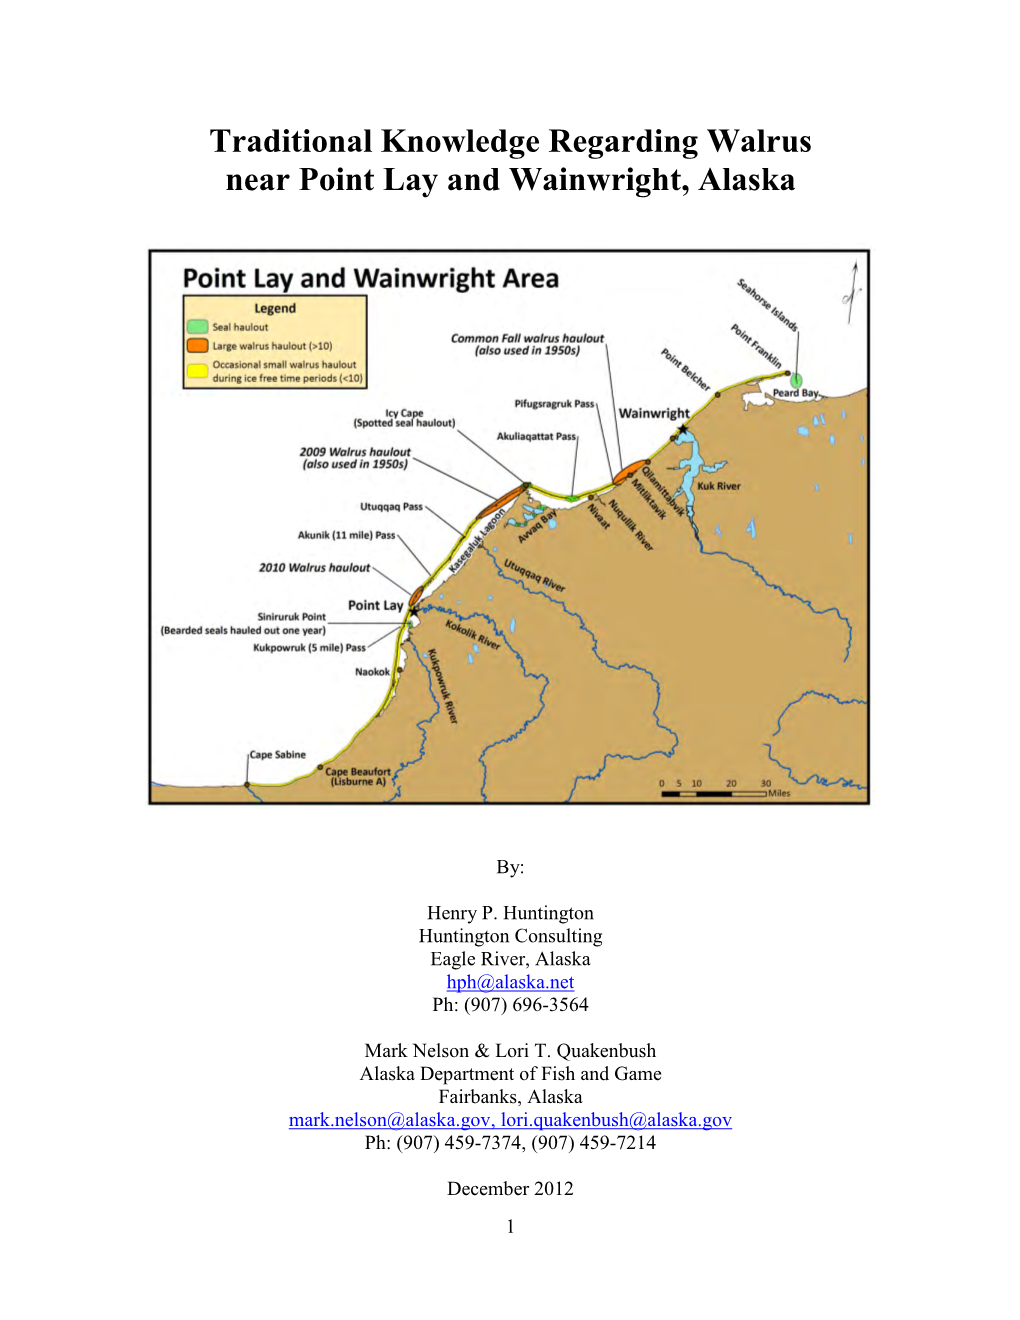 Traditional Knowledge Regarding Walrus Near Point Lay and Wainwright, Alaska